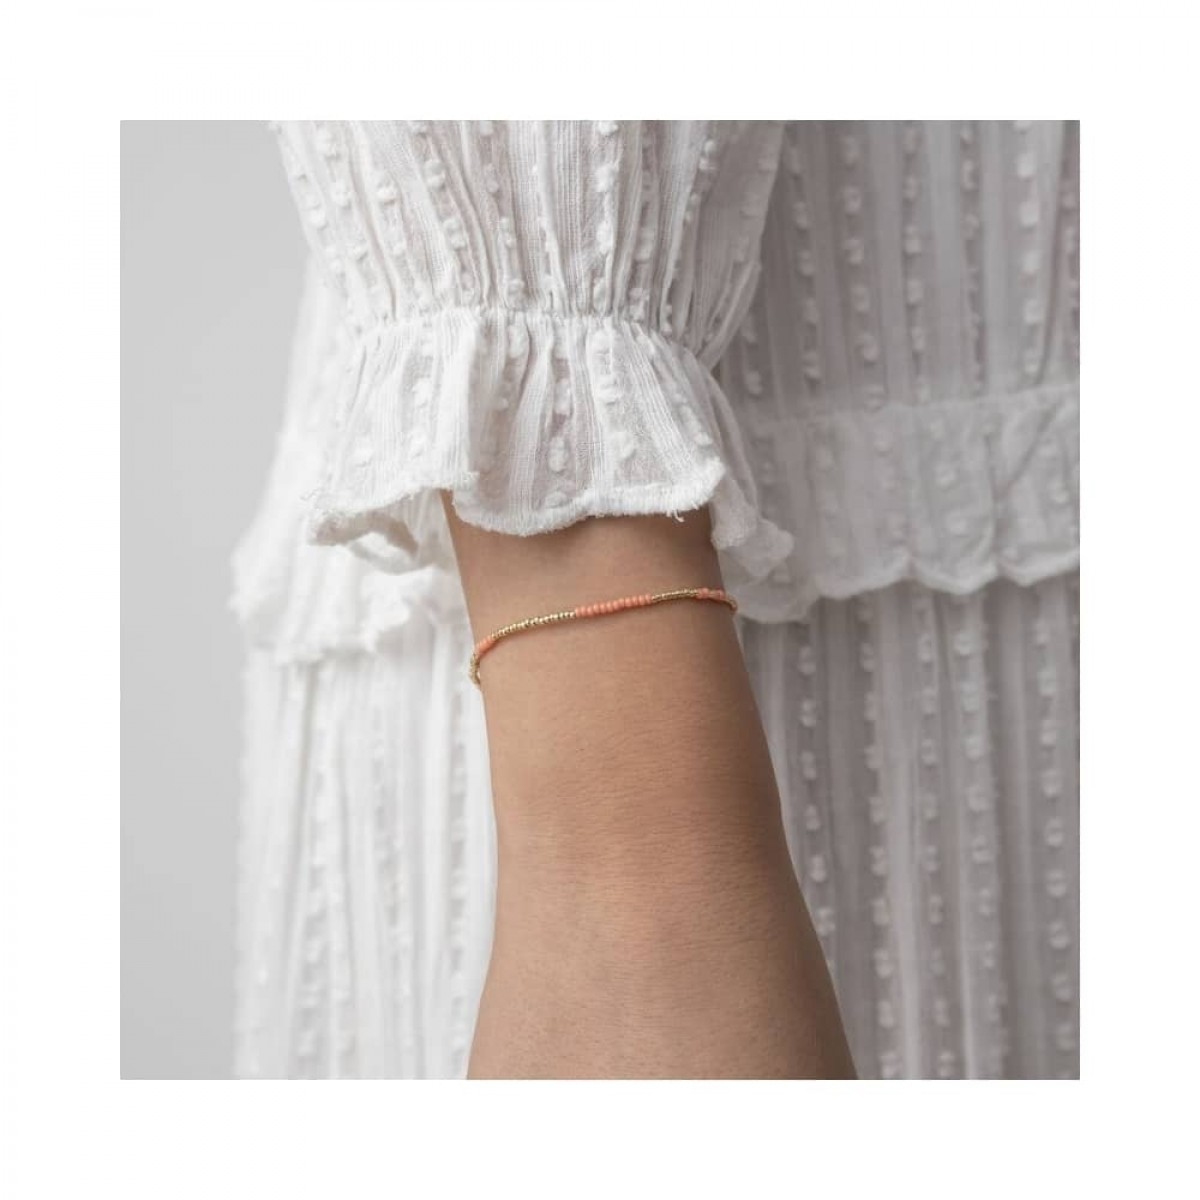 anni lu asym bracelet - soft rose - model fra siden 